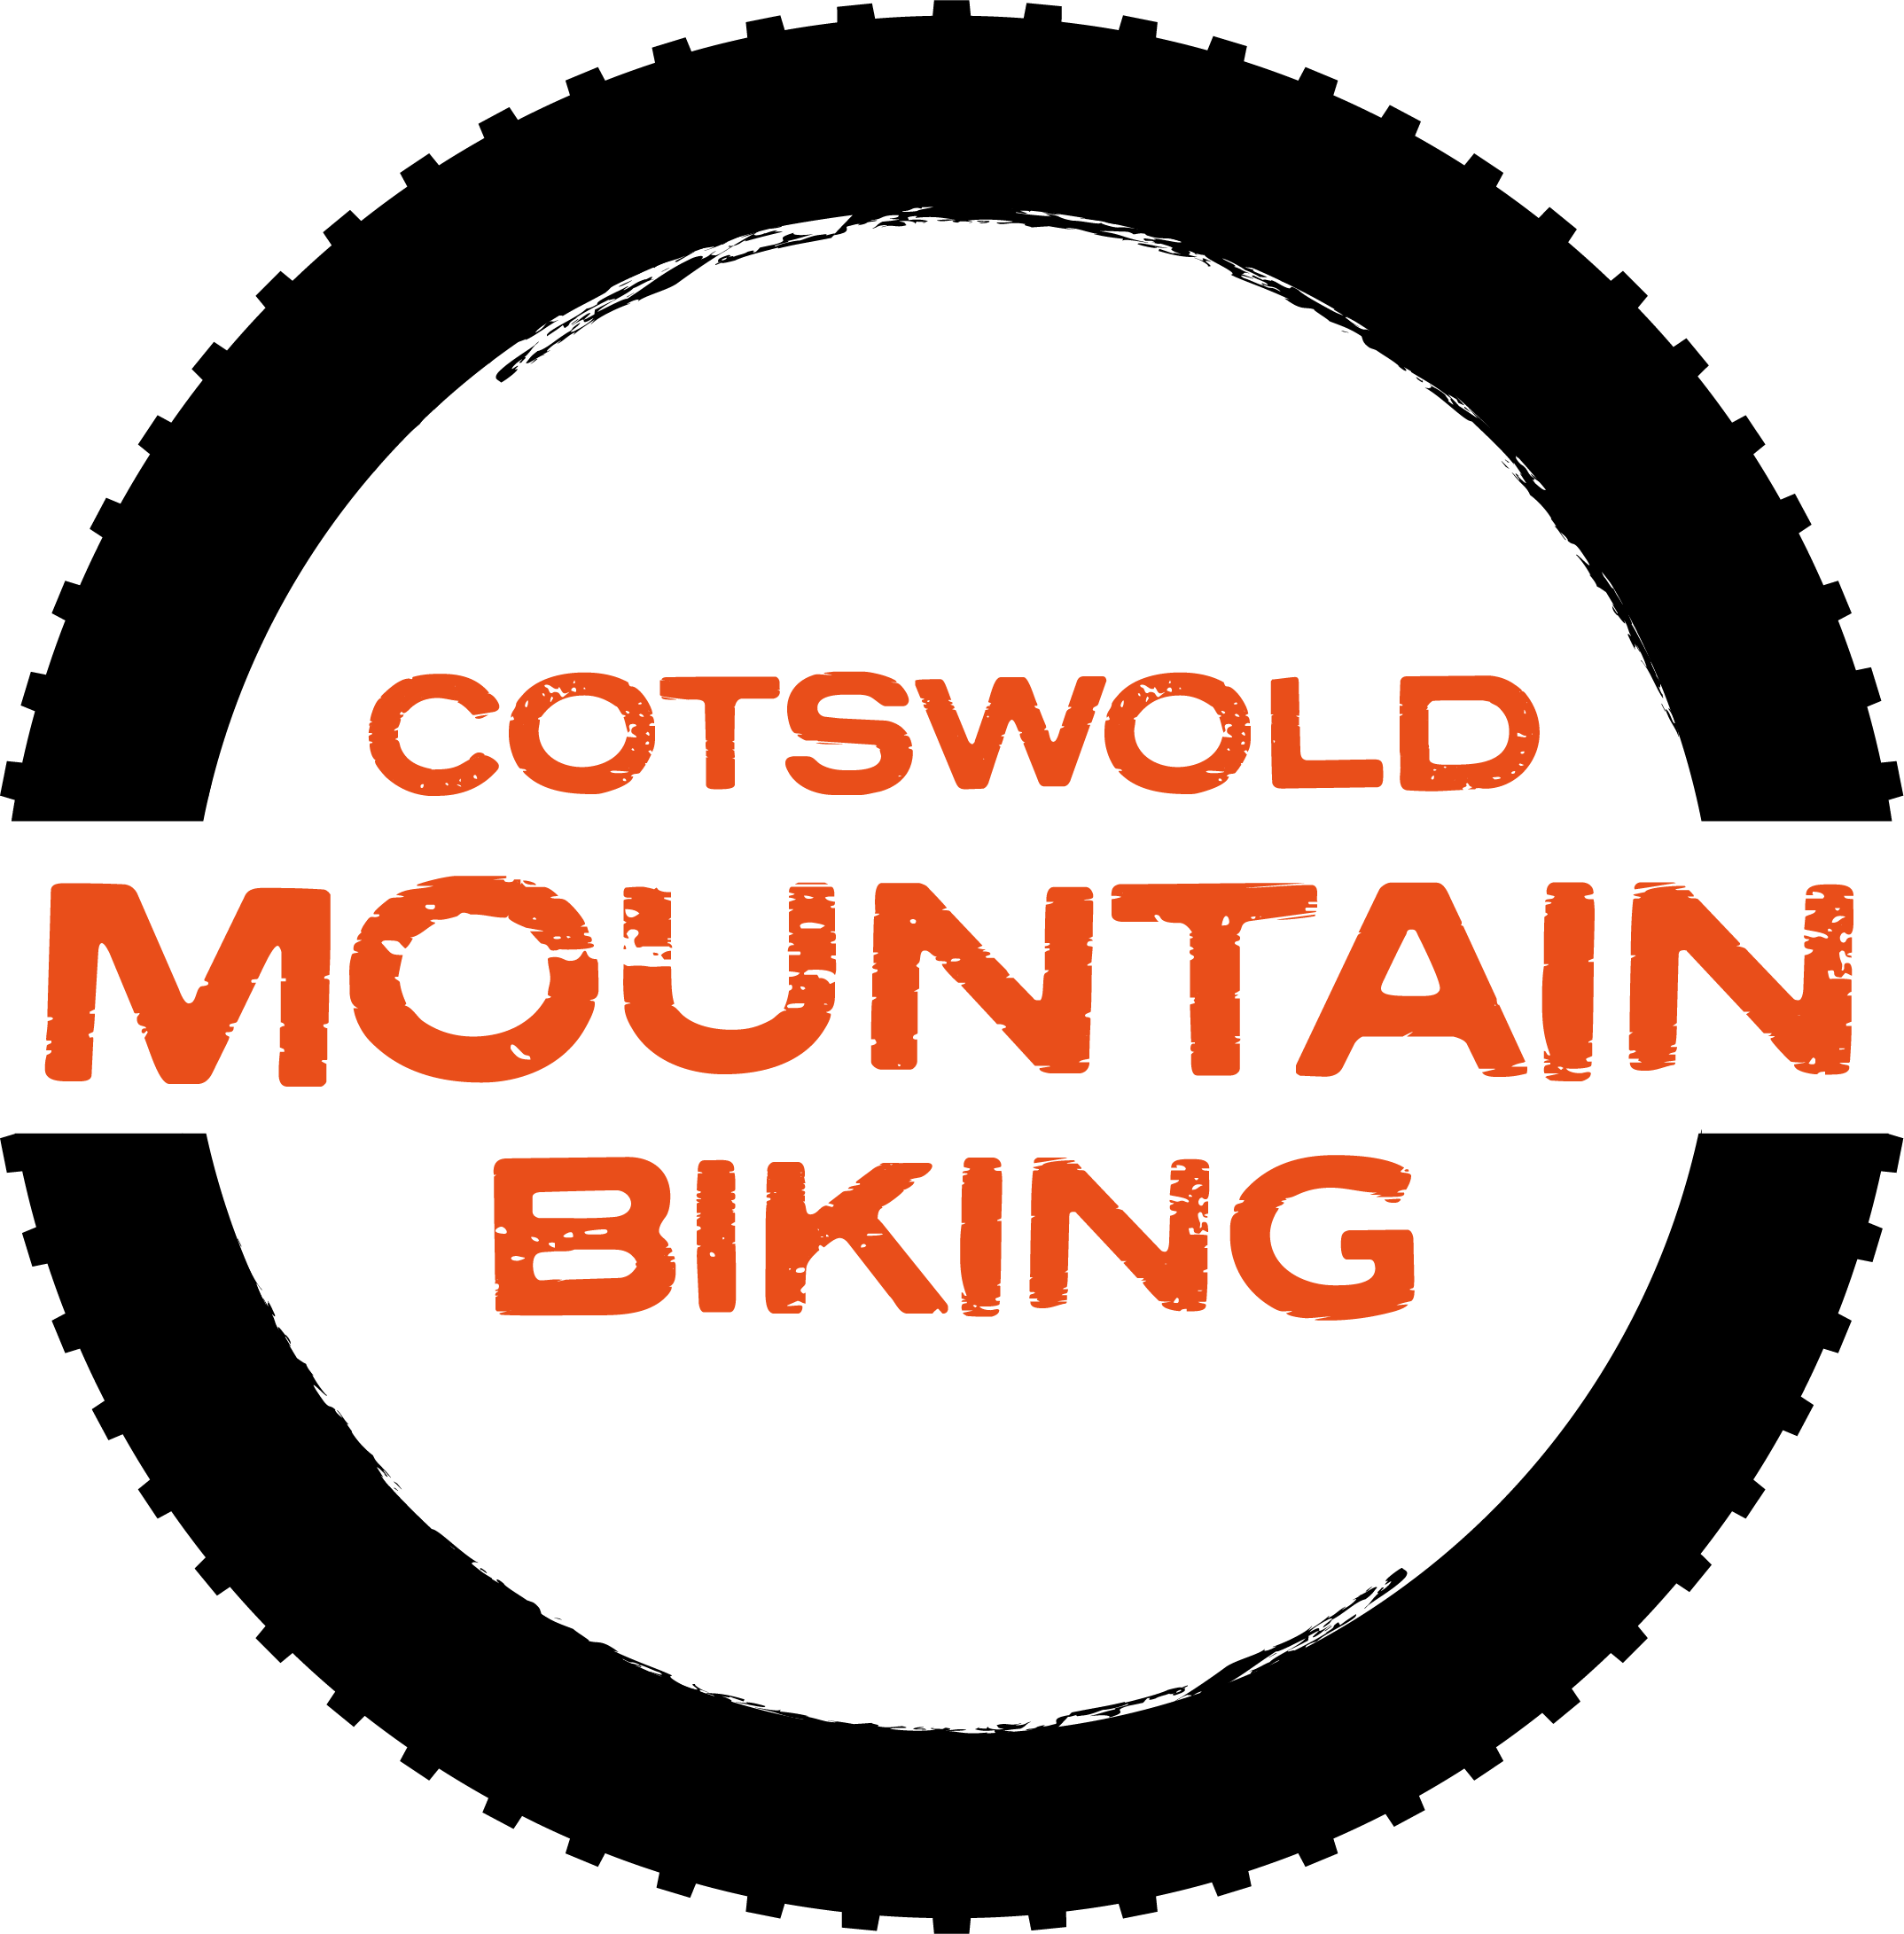 Cotswold Mountain Biking